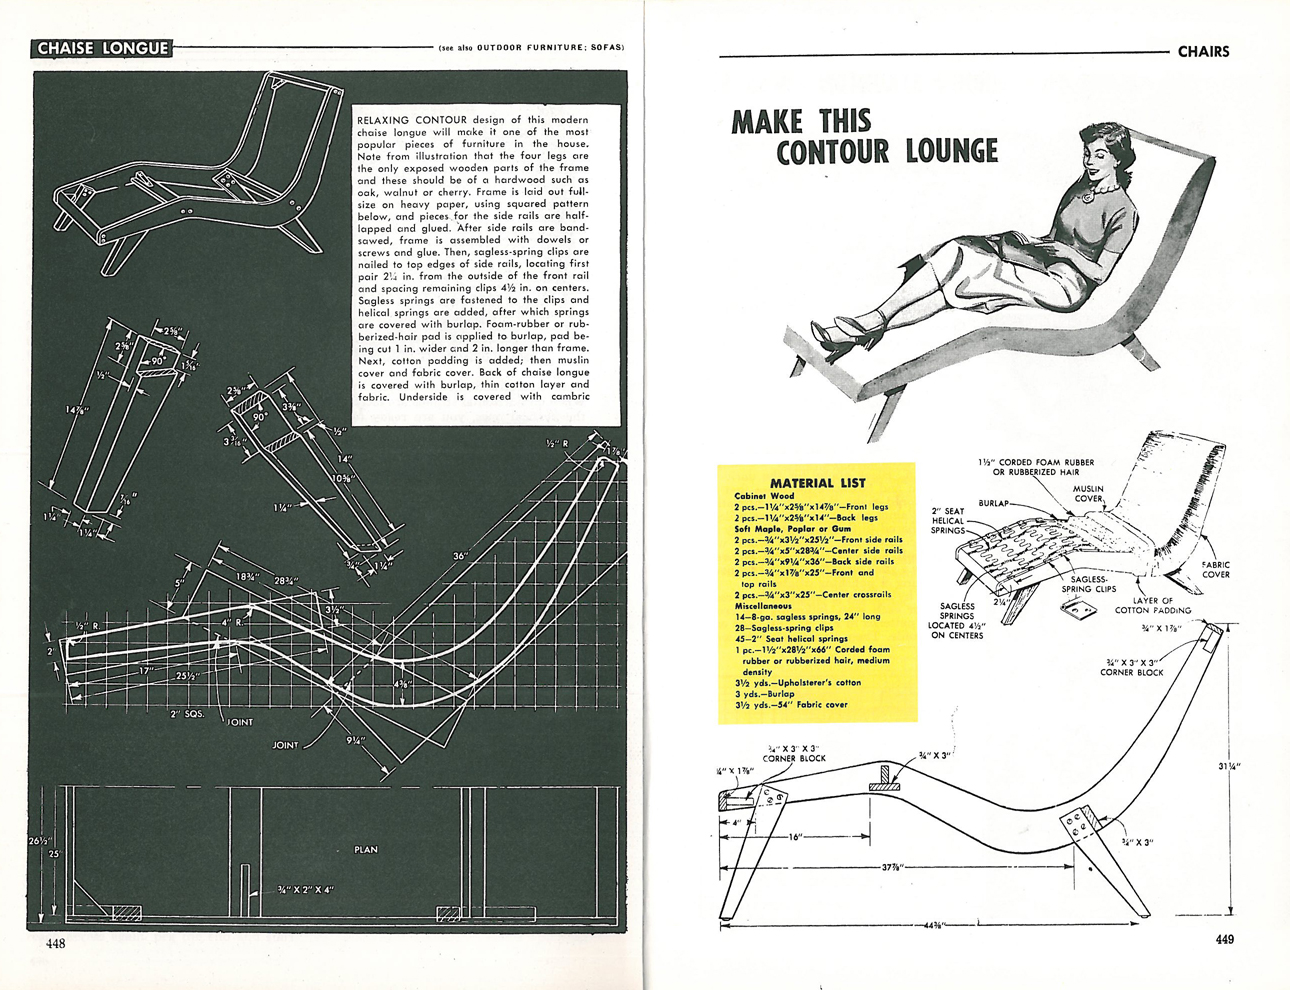 Popular Mechanics Vintage Plans